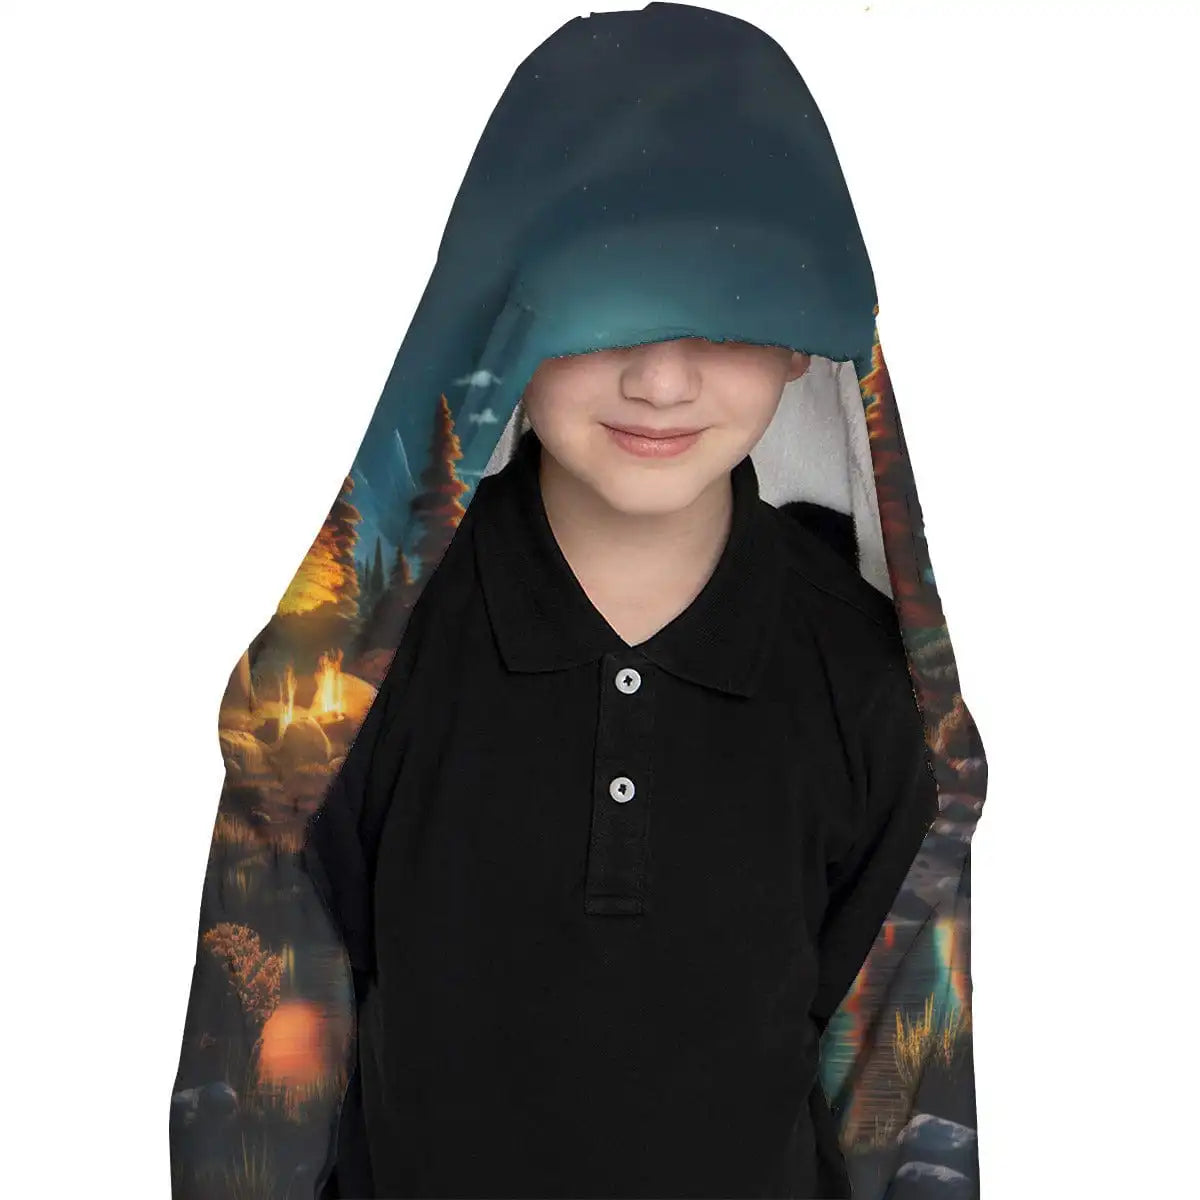 Moonlight in a Camp Unisex Kid's Cozy Hooded Blanket